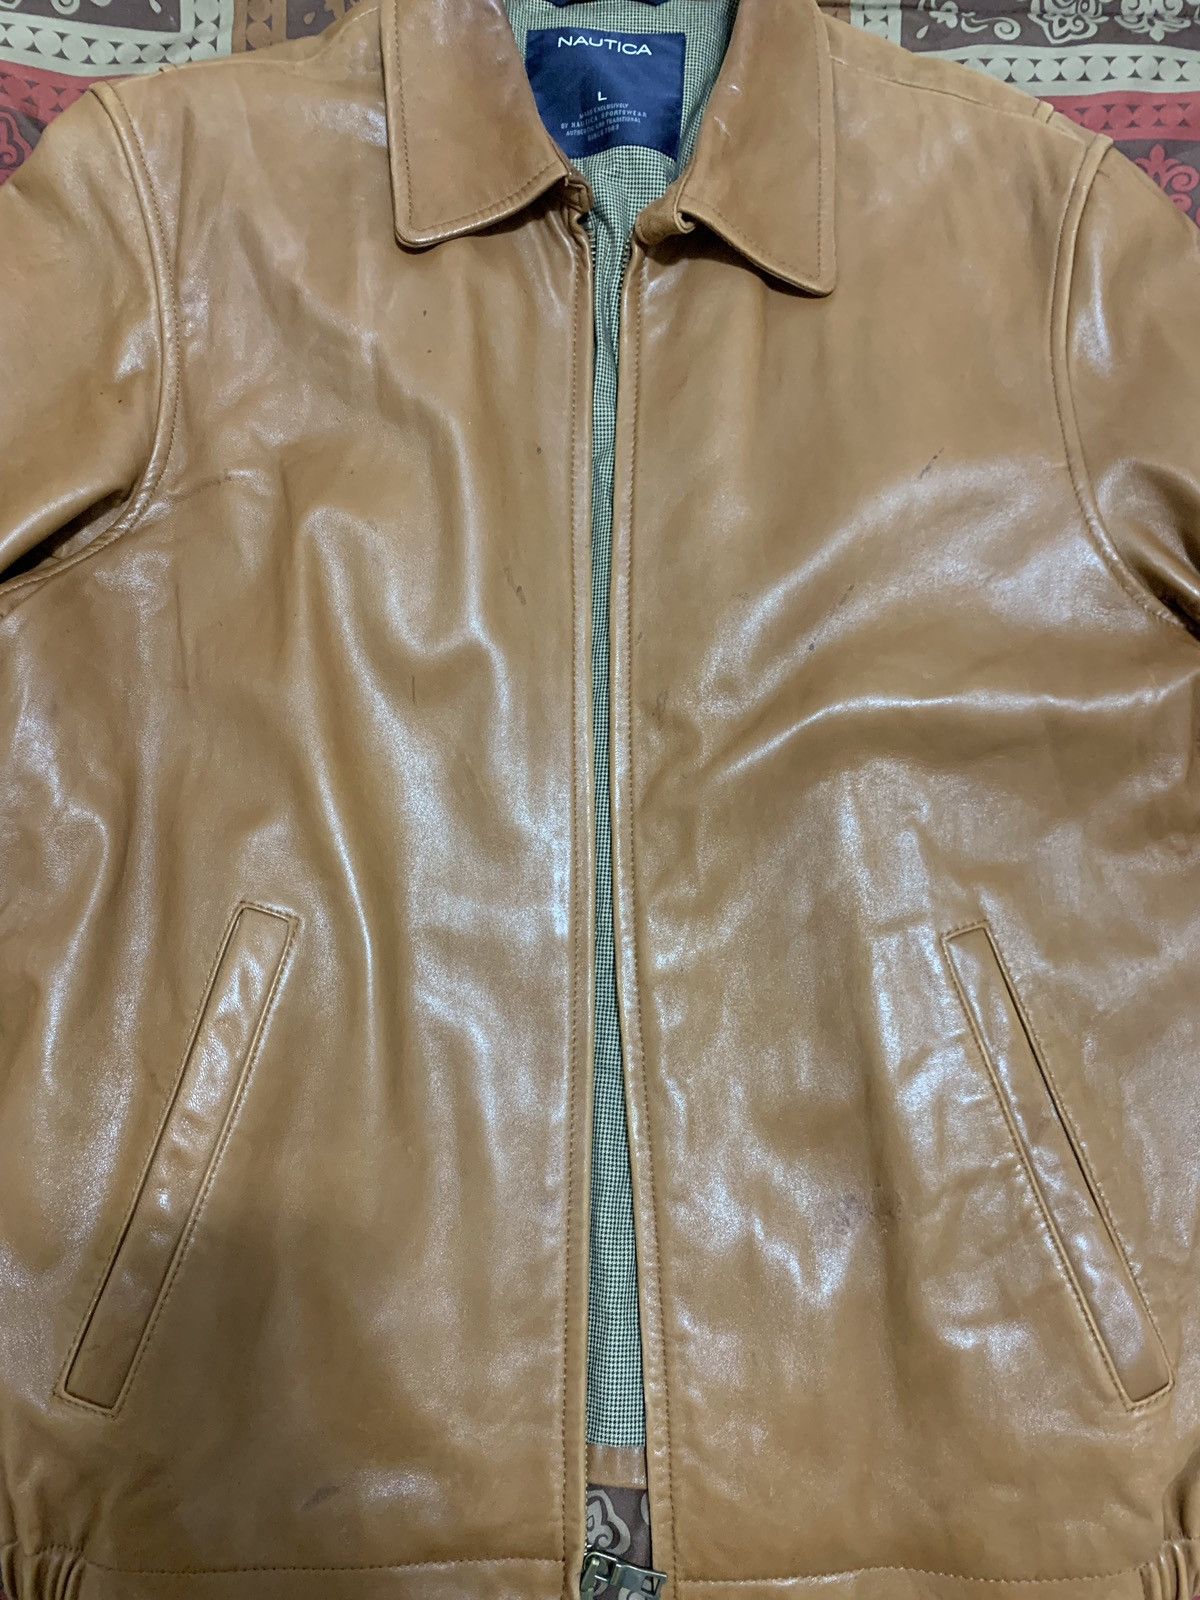 Vintage Vintage Nautica Leather Jacket Size US L / EU 52-54 / 3 - 10 Thumbnail